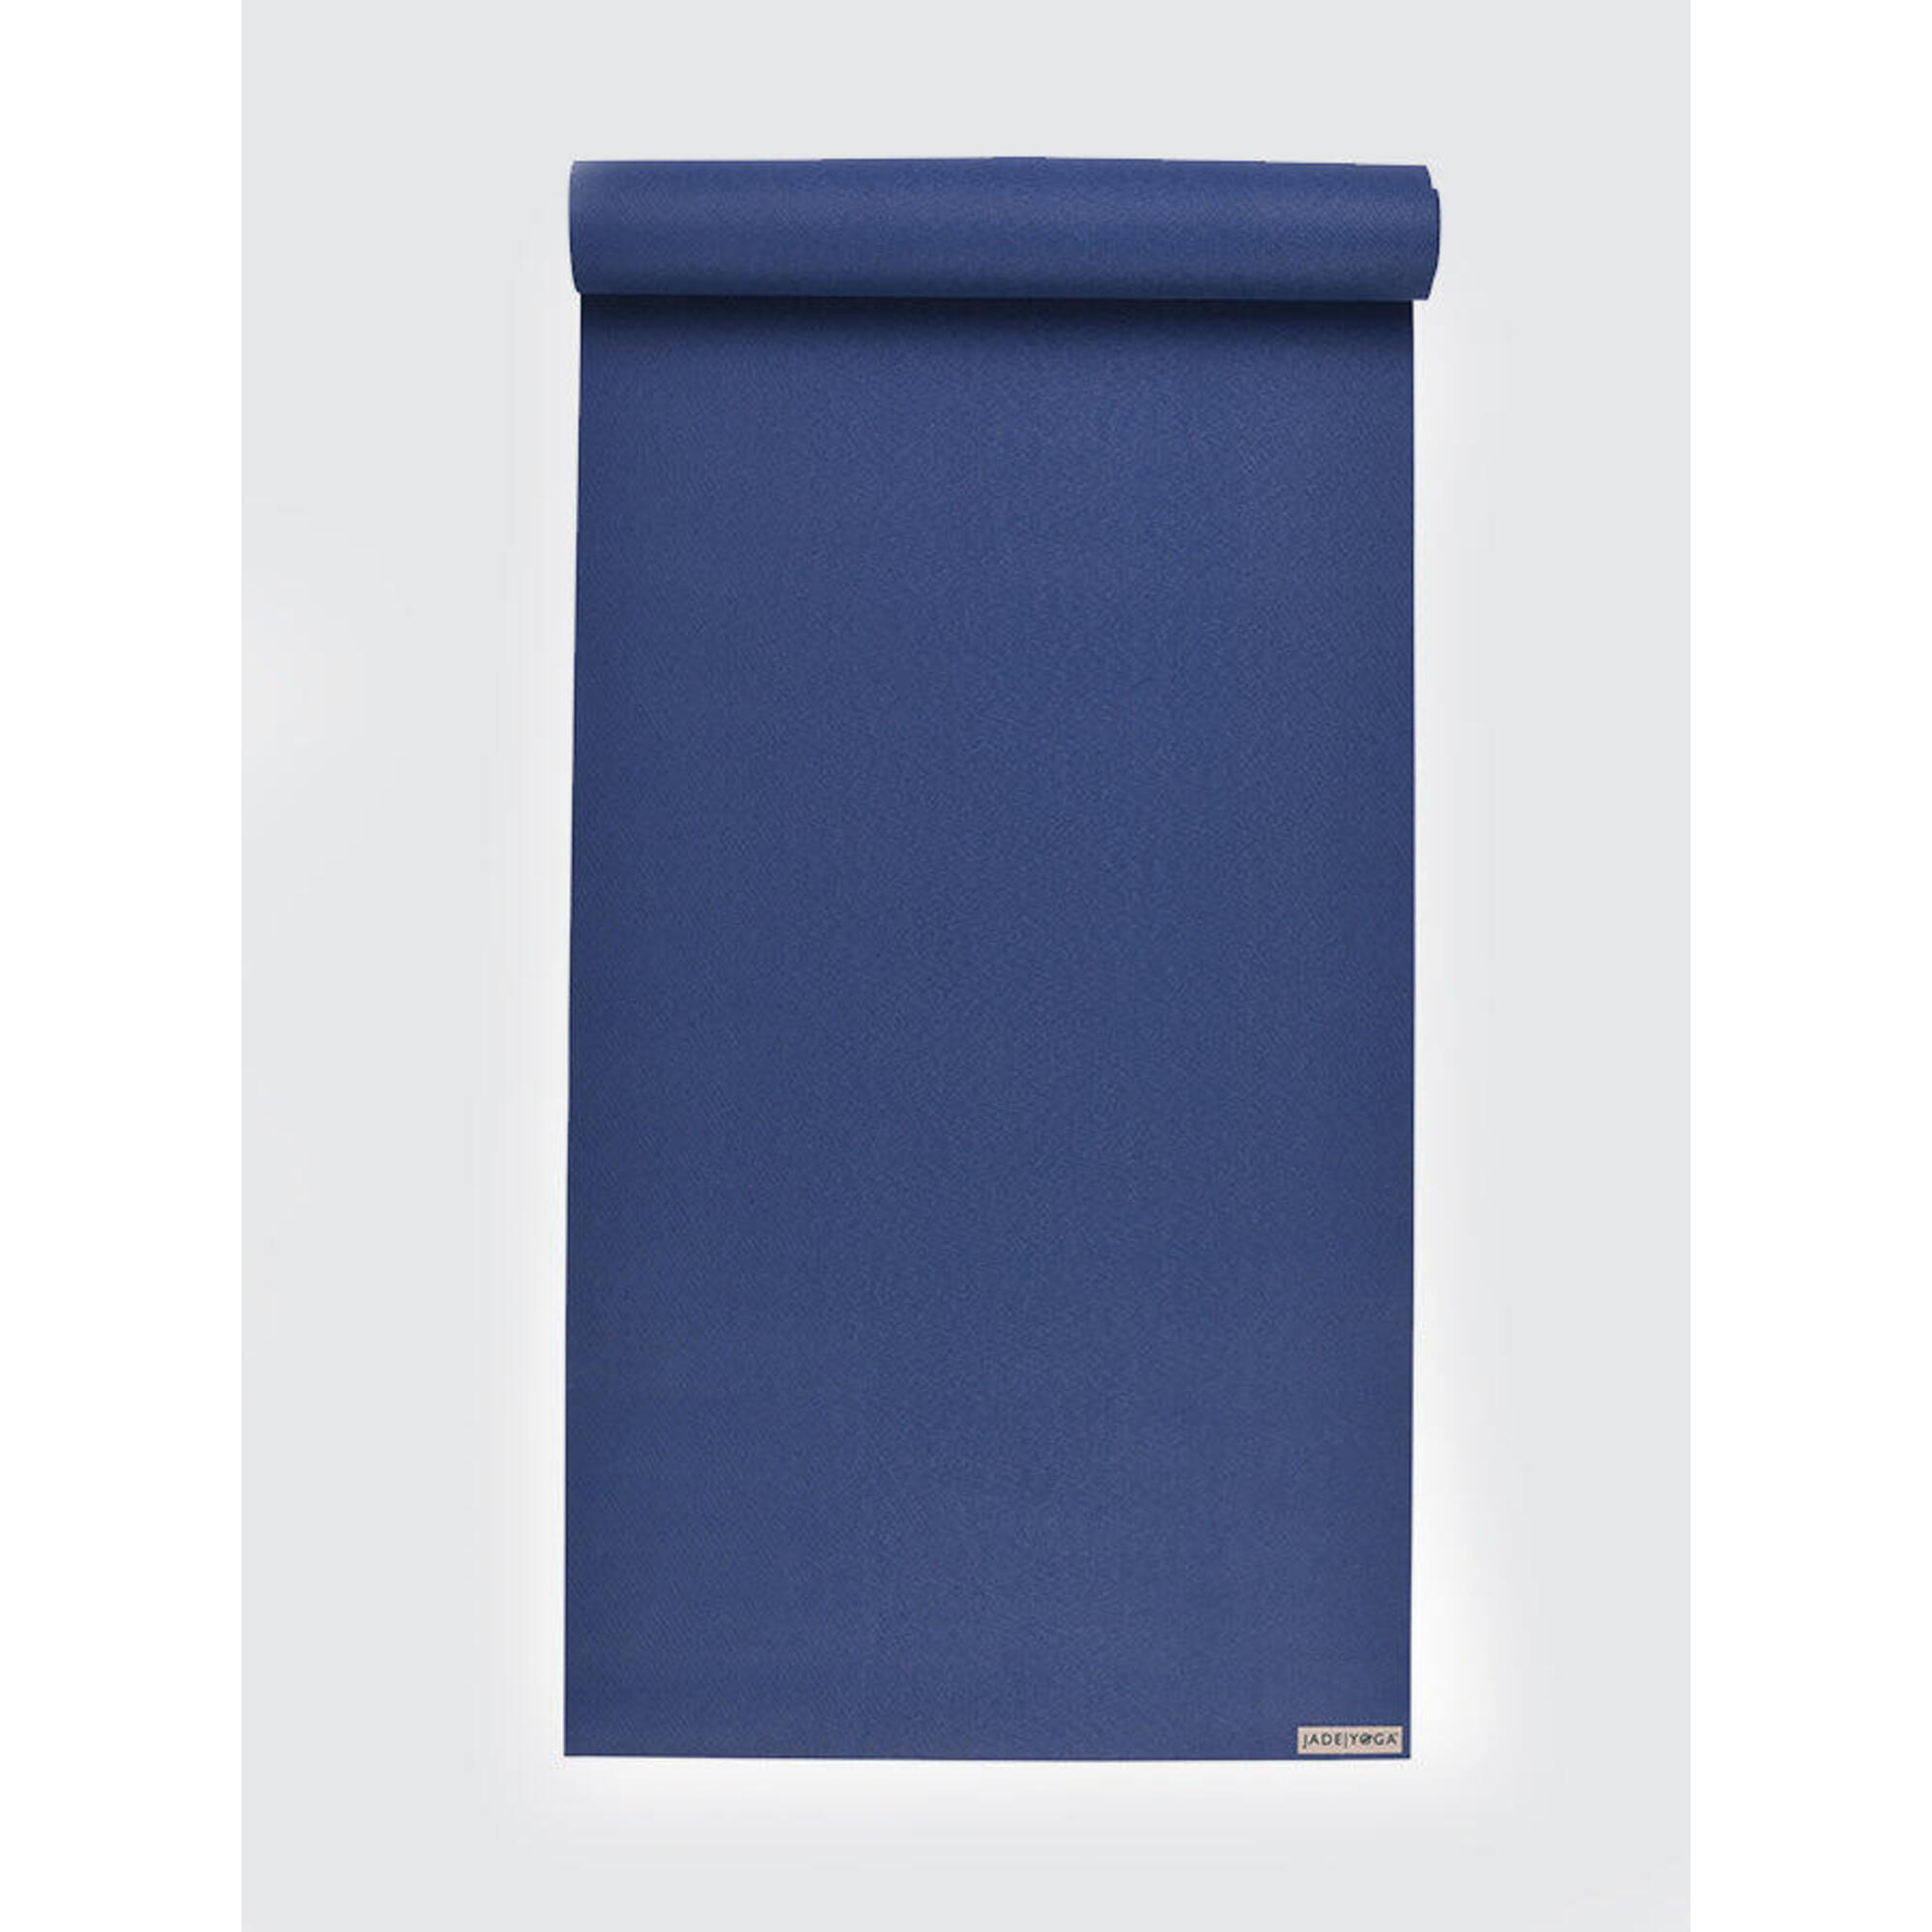 Jade Yoga Harmony 74 Inch Yoga Mat 5mm - Midnight Blue 1/3